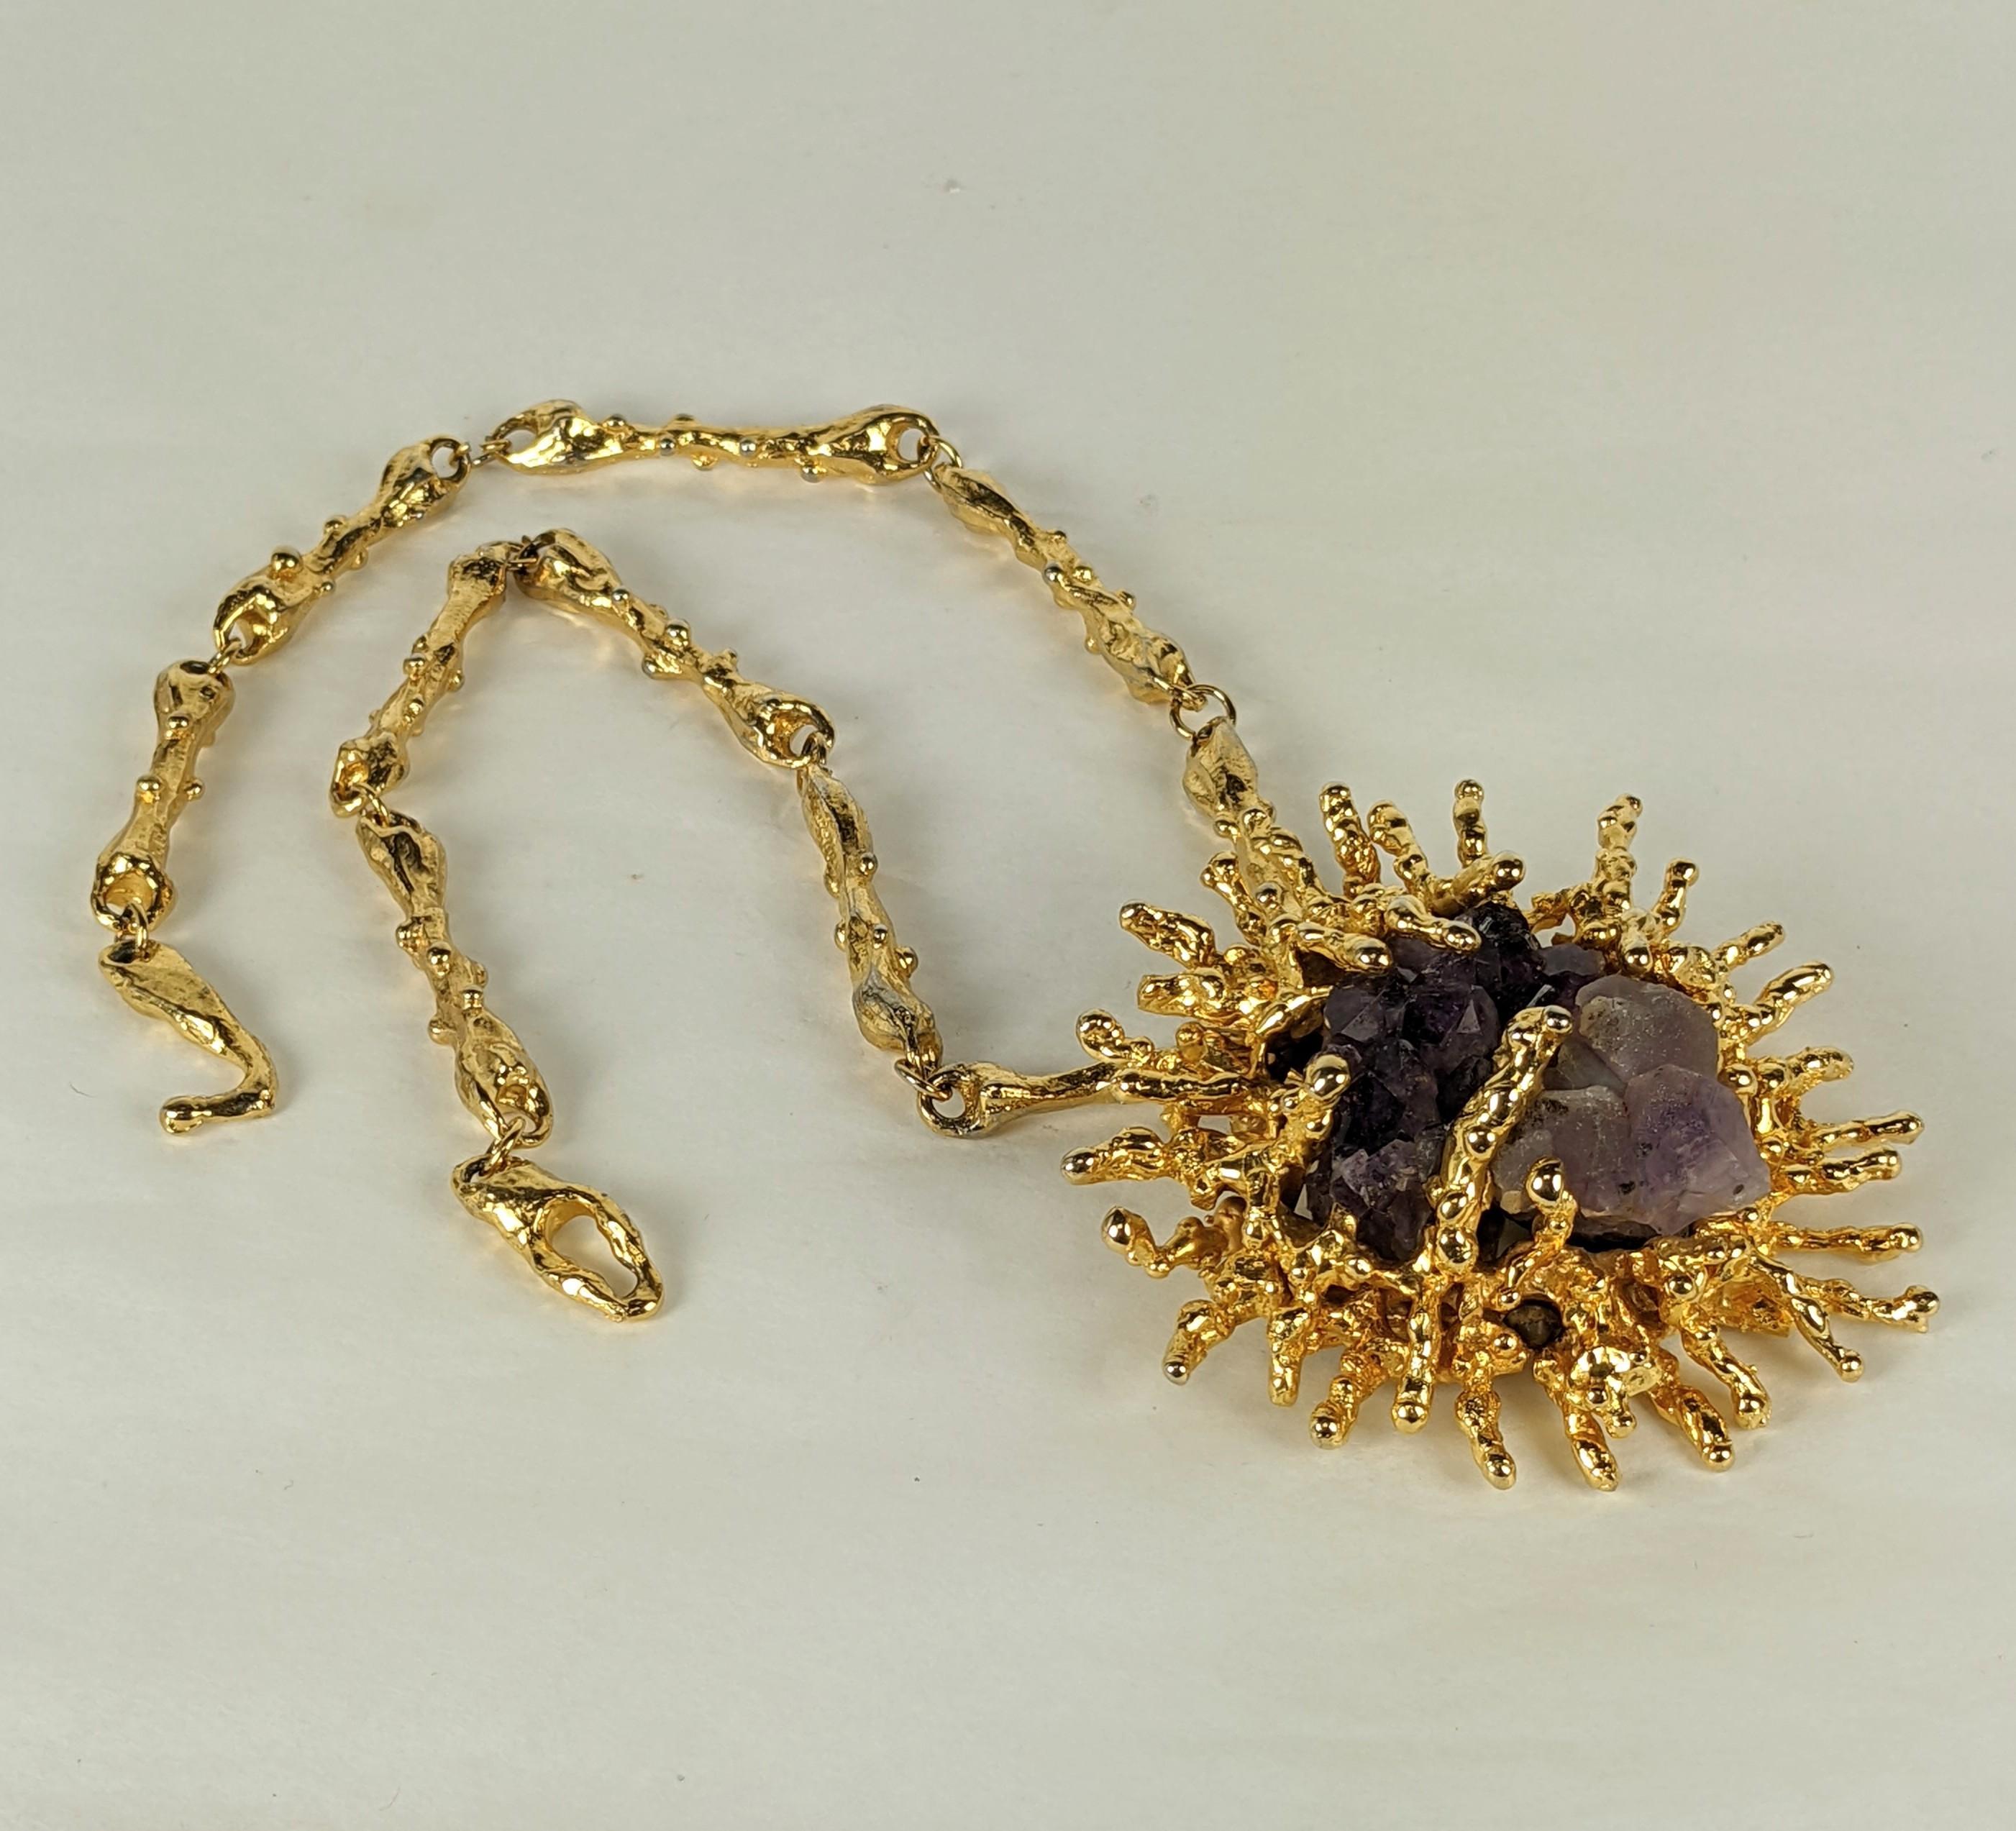 panetta jewelry necklace